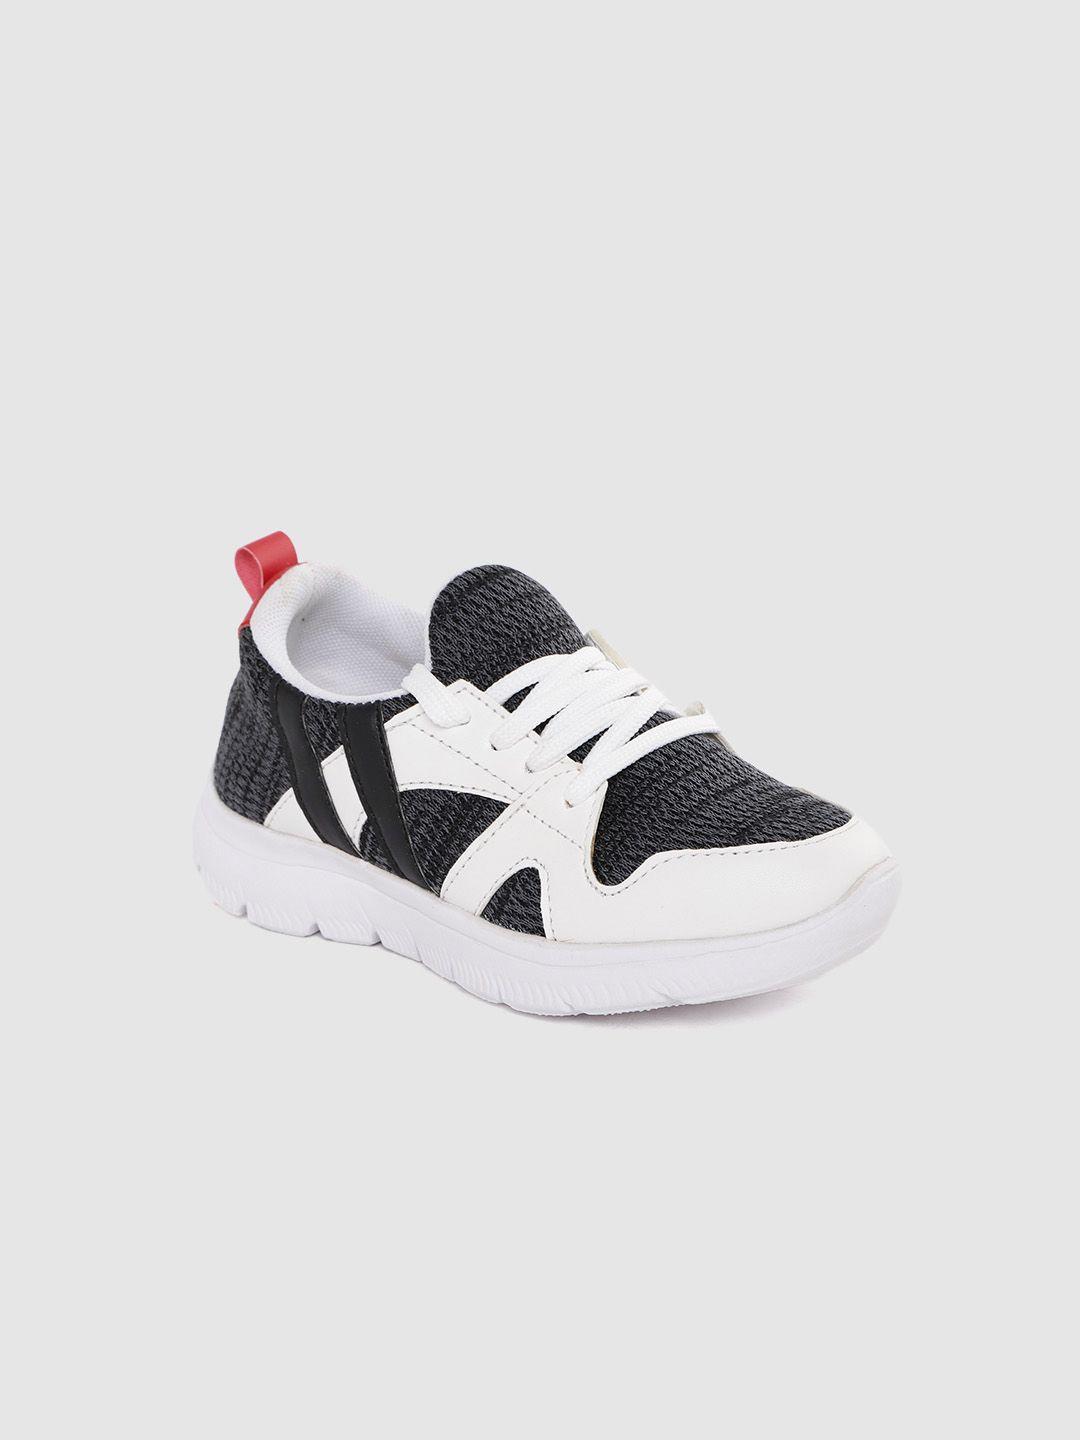 yk boys charcoal grey & white colourblocked sneakers